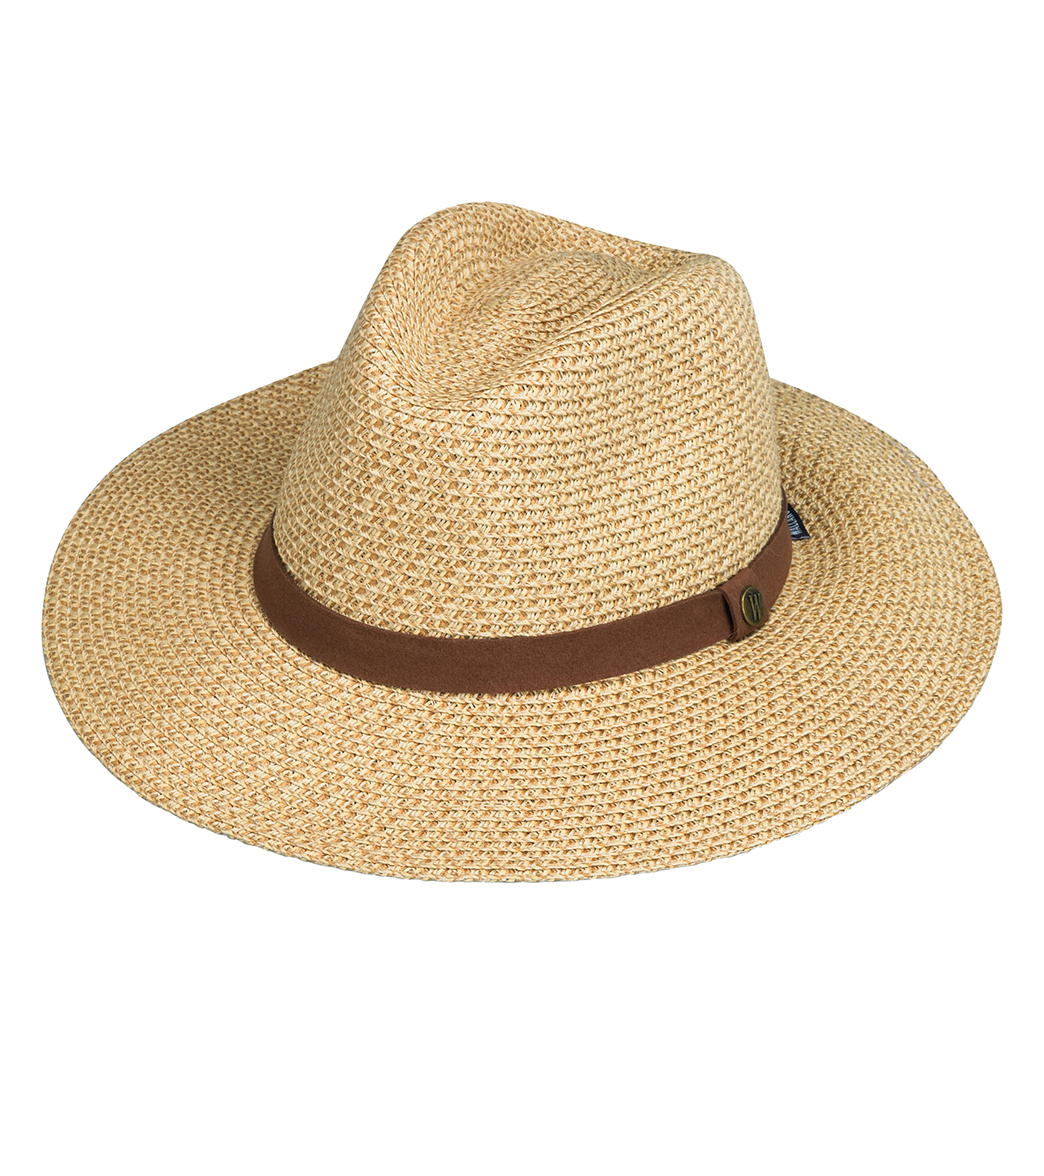 Wallaroo Men's Outback Sun Hat - Natural Large/Xl - Swimoutlet.com